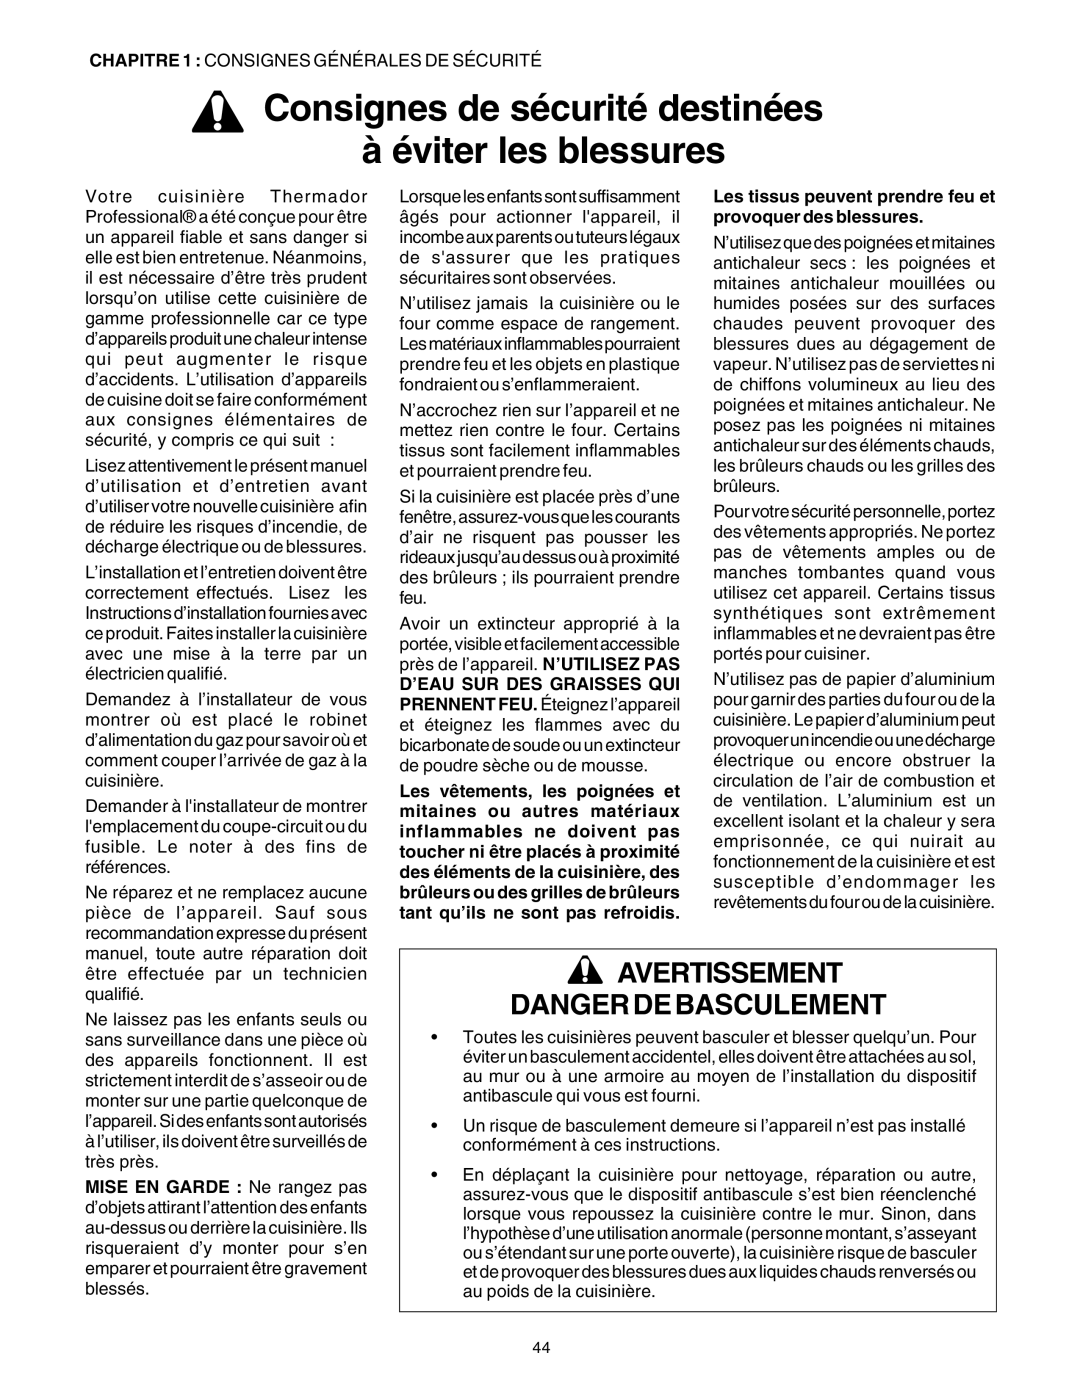 Thermador DP30 manual Avertissement Danger De Basculement 